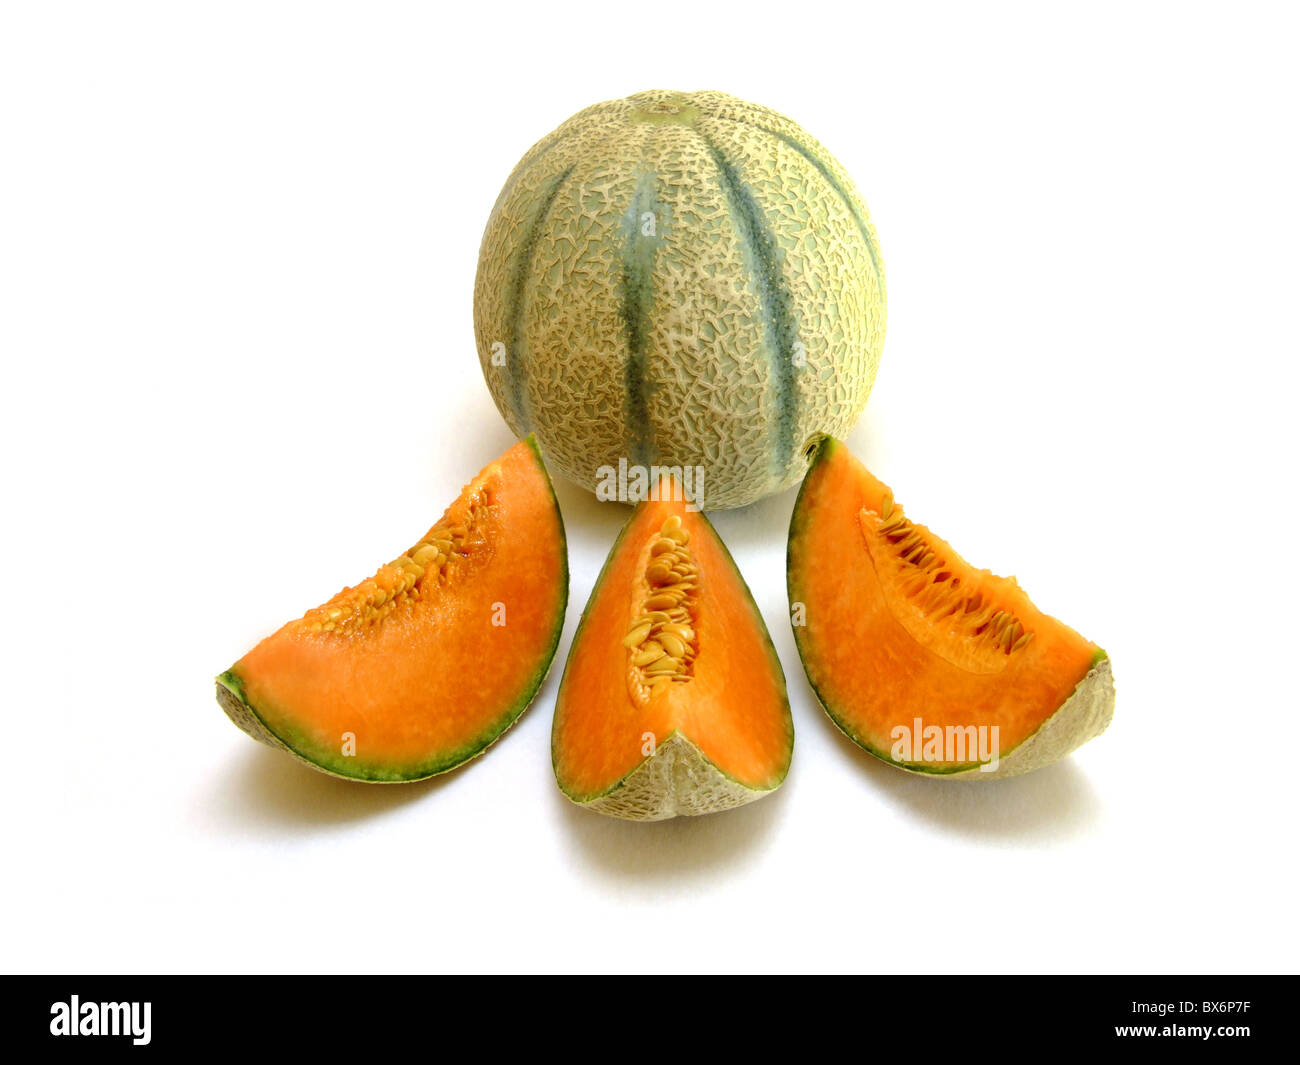 Cantaloupe / melon (Cucumis melo cantalupensis) Stock Photo